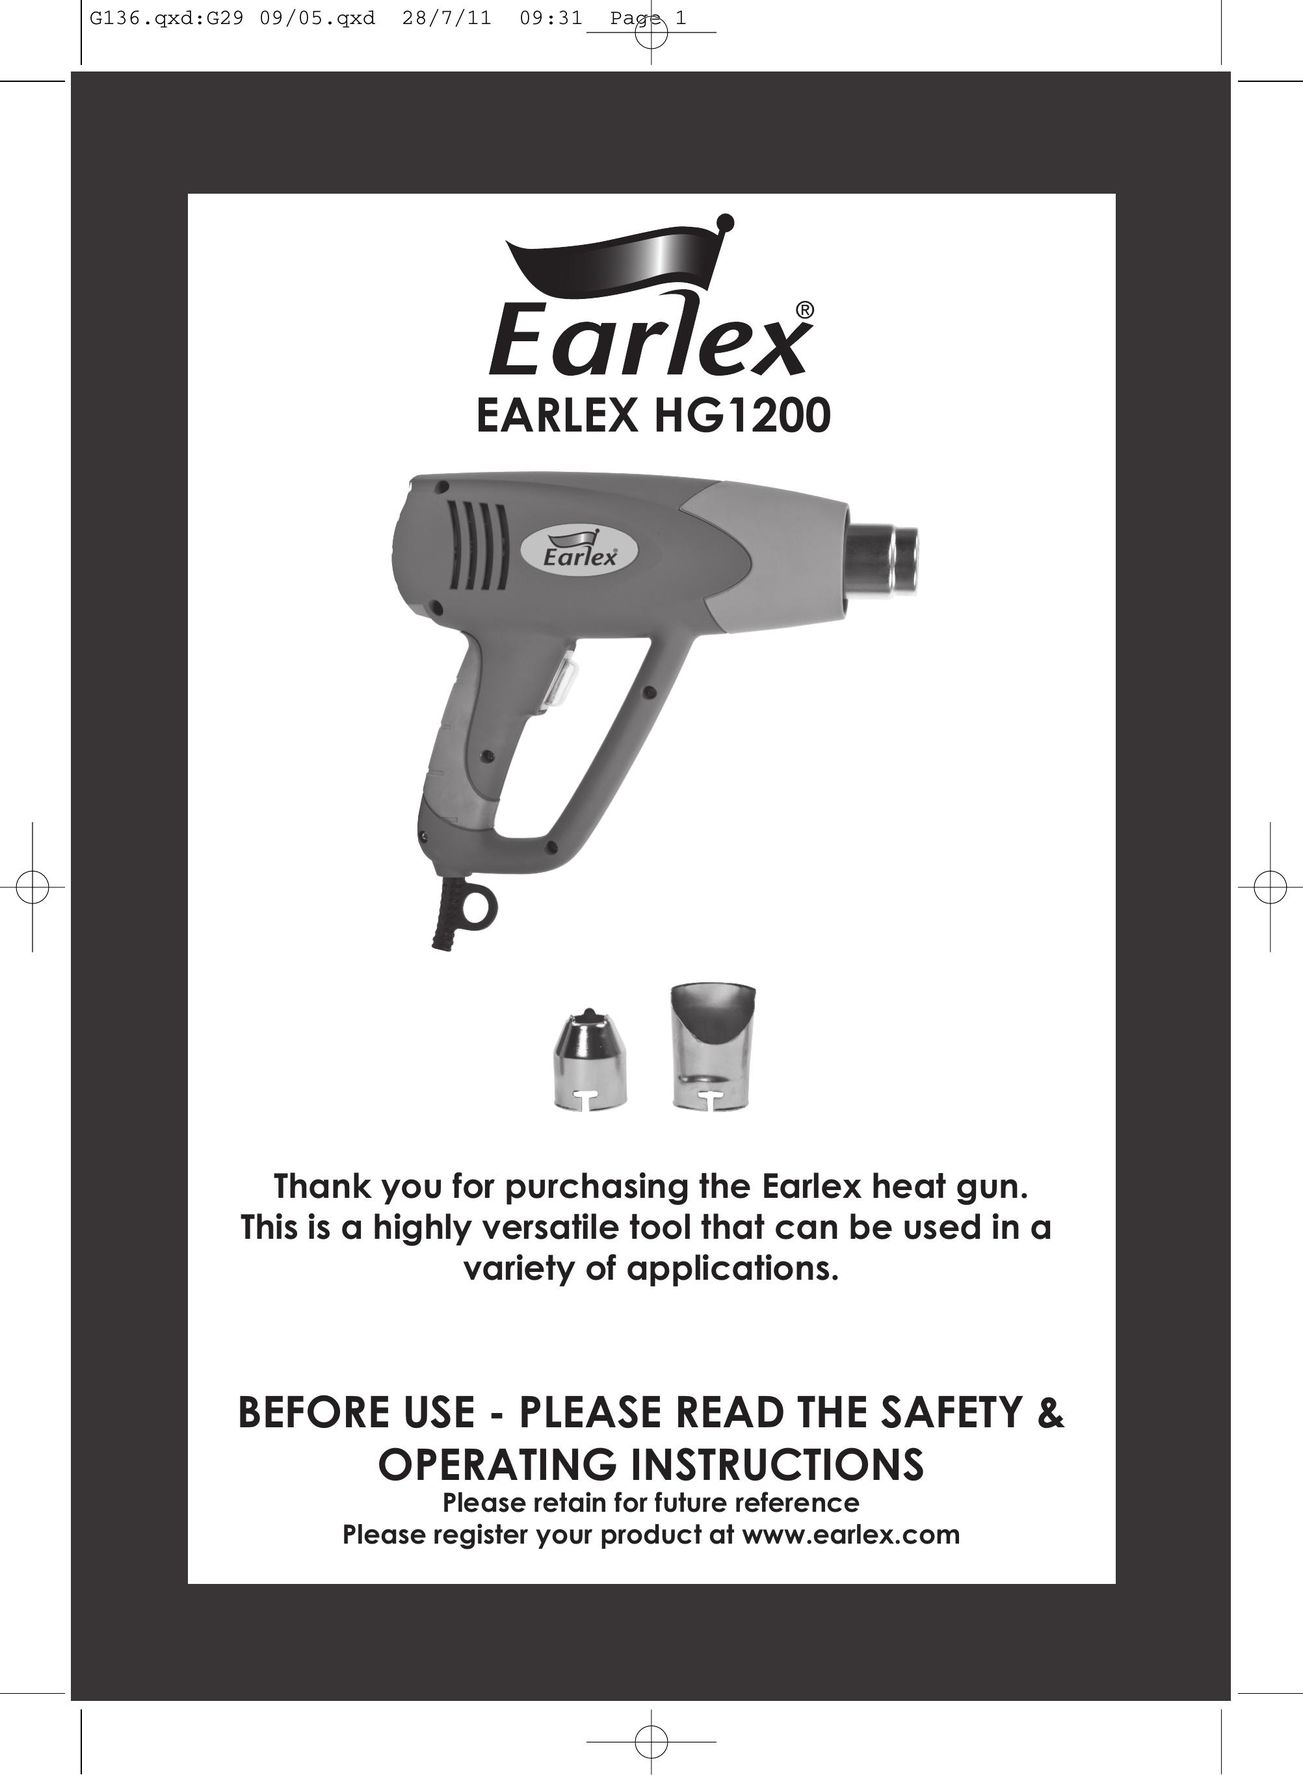 Earlex HG1200 Heat Gun User Manual